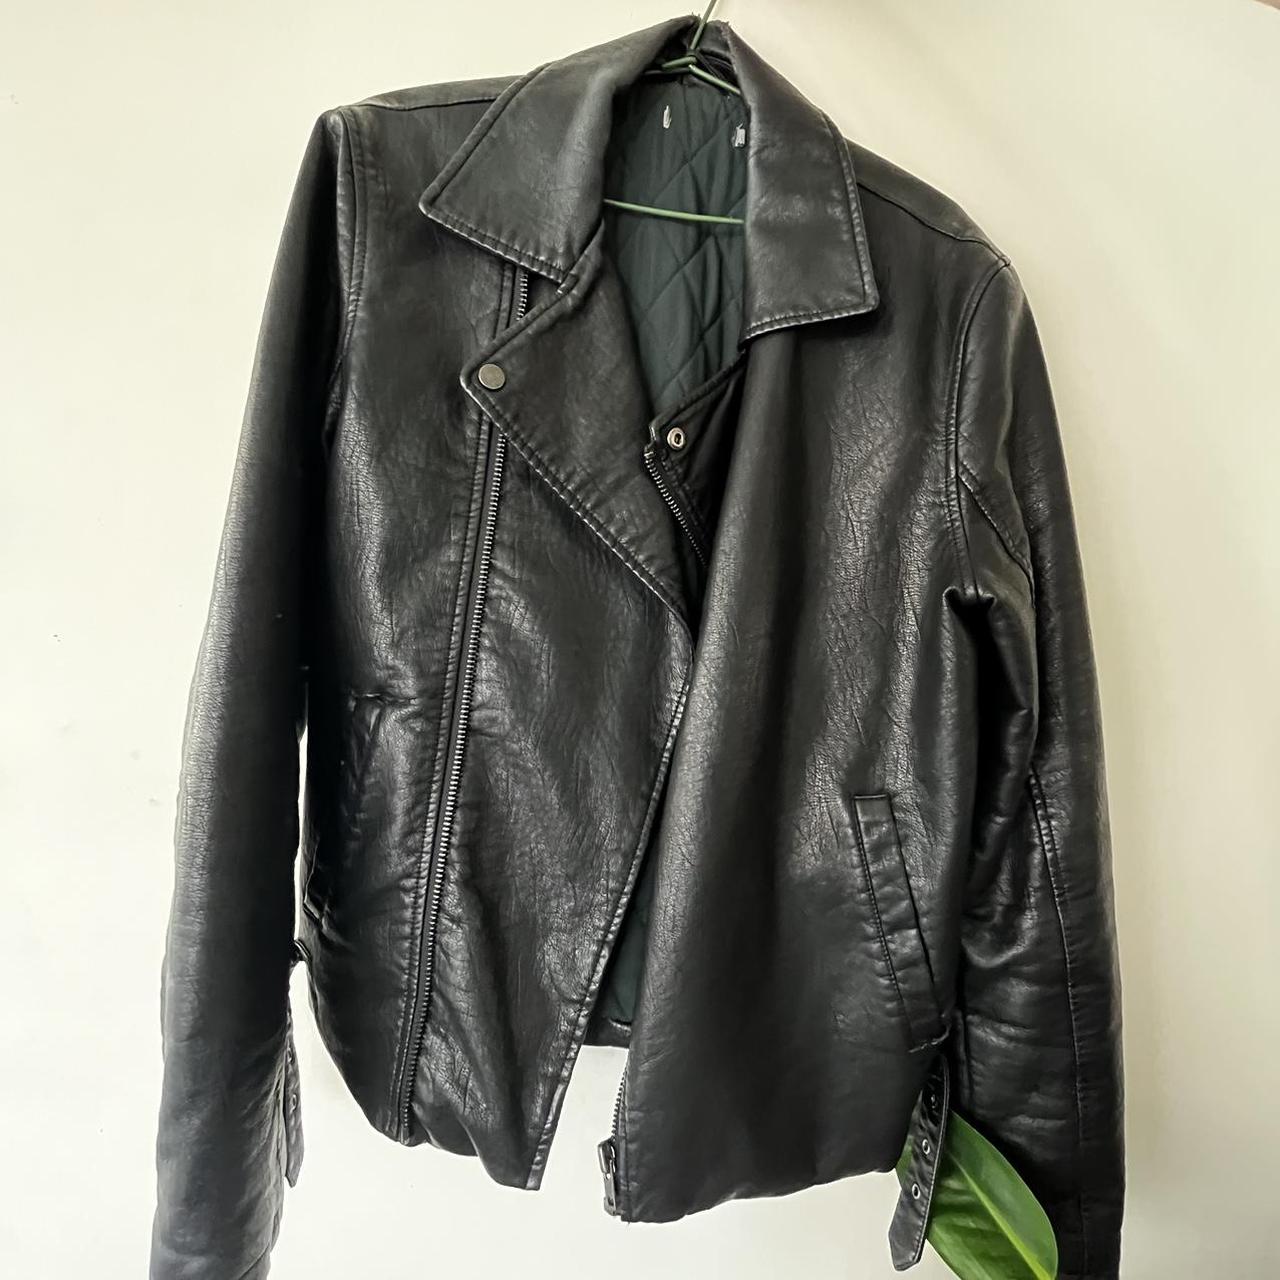 Vintage Leather jacket Has general wear around the... - Depop